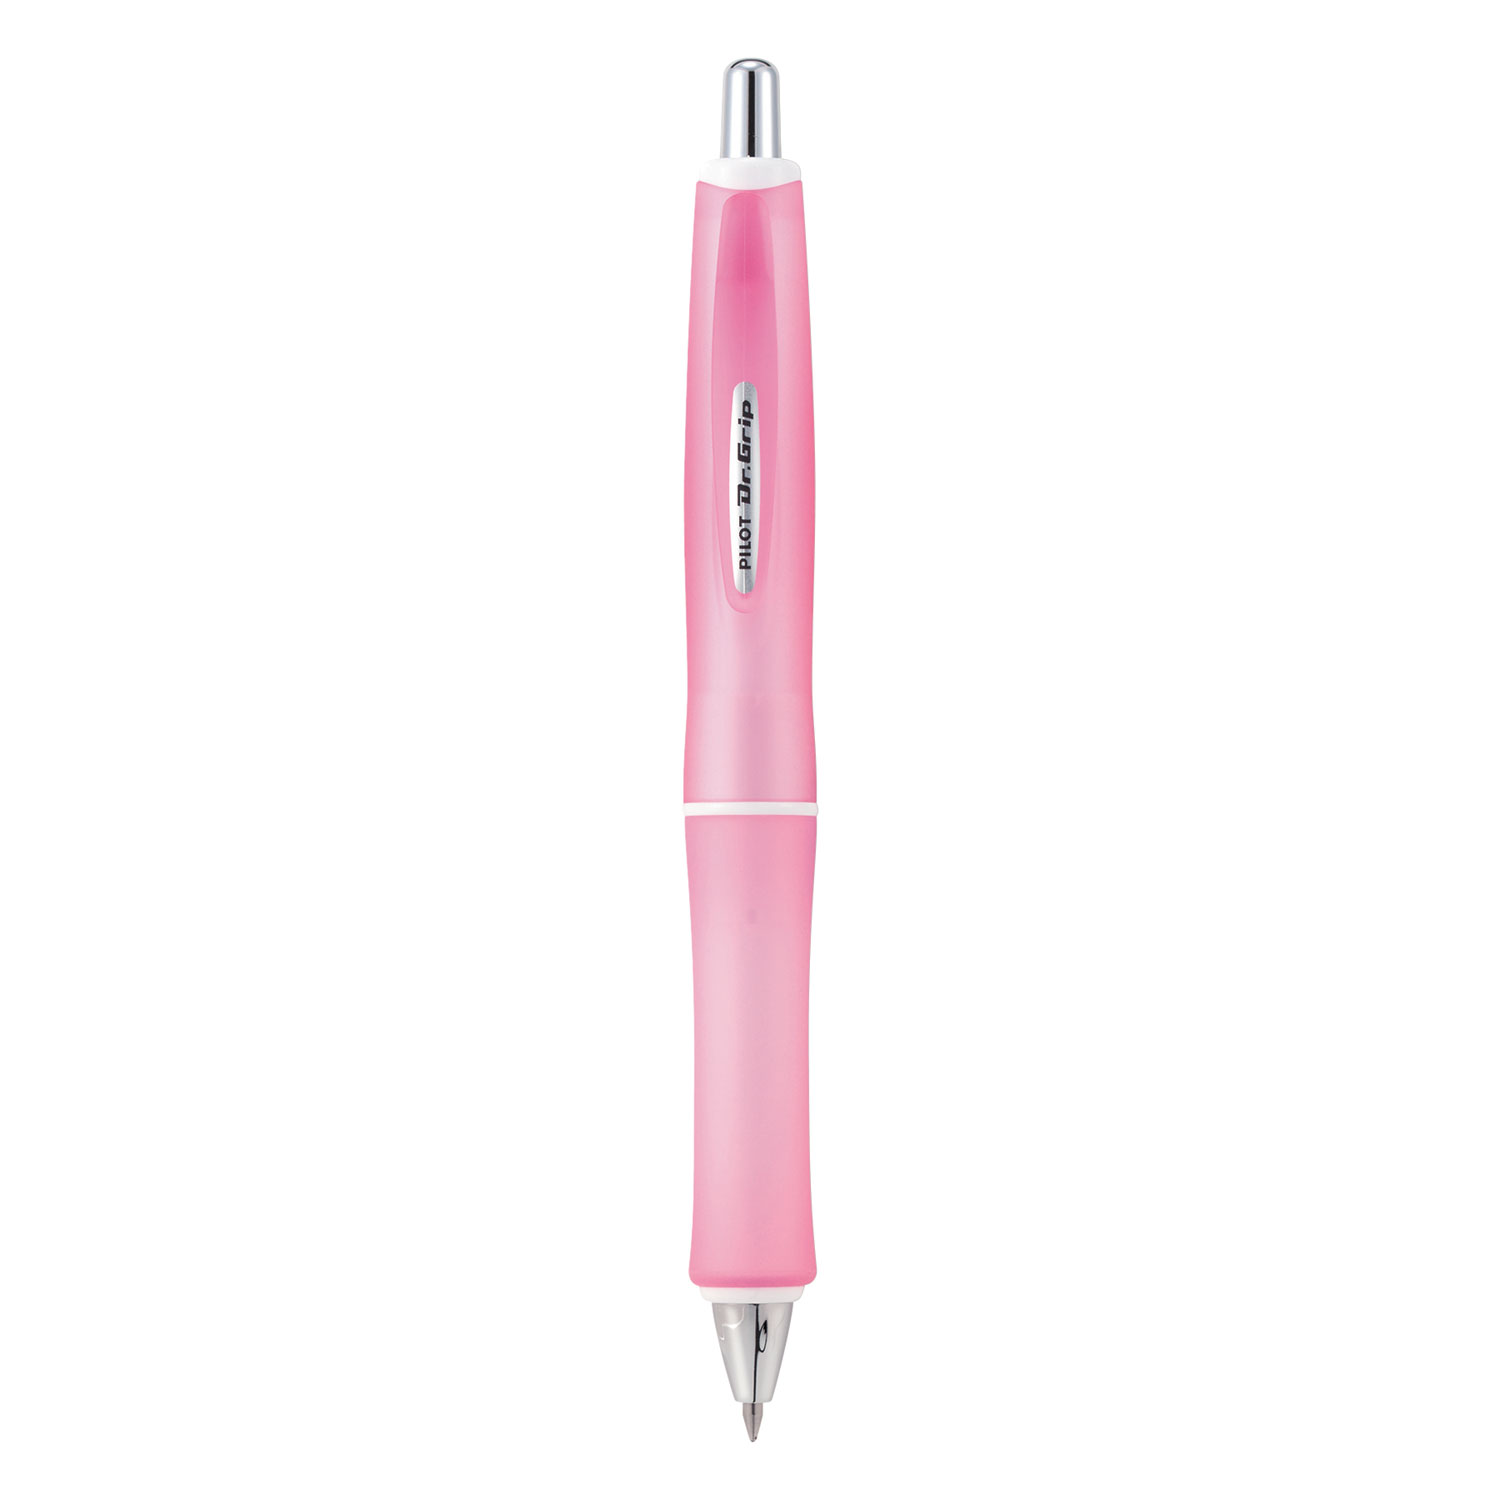  Pilot 36252 Dr. Grip Frosted Retractable Ballpoint Pen, 1mm, Black Ink, Pink Barrel (PIL36252) 